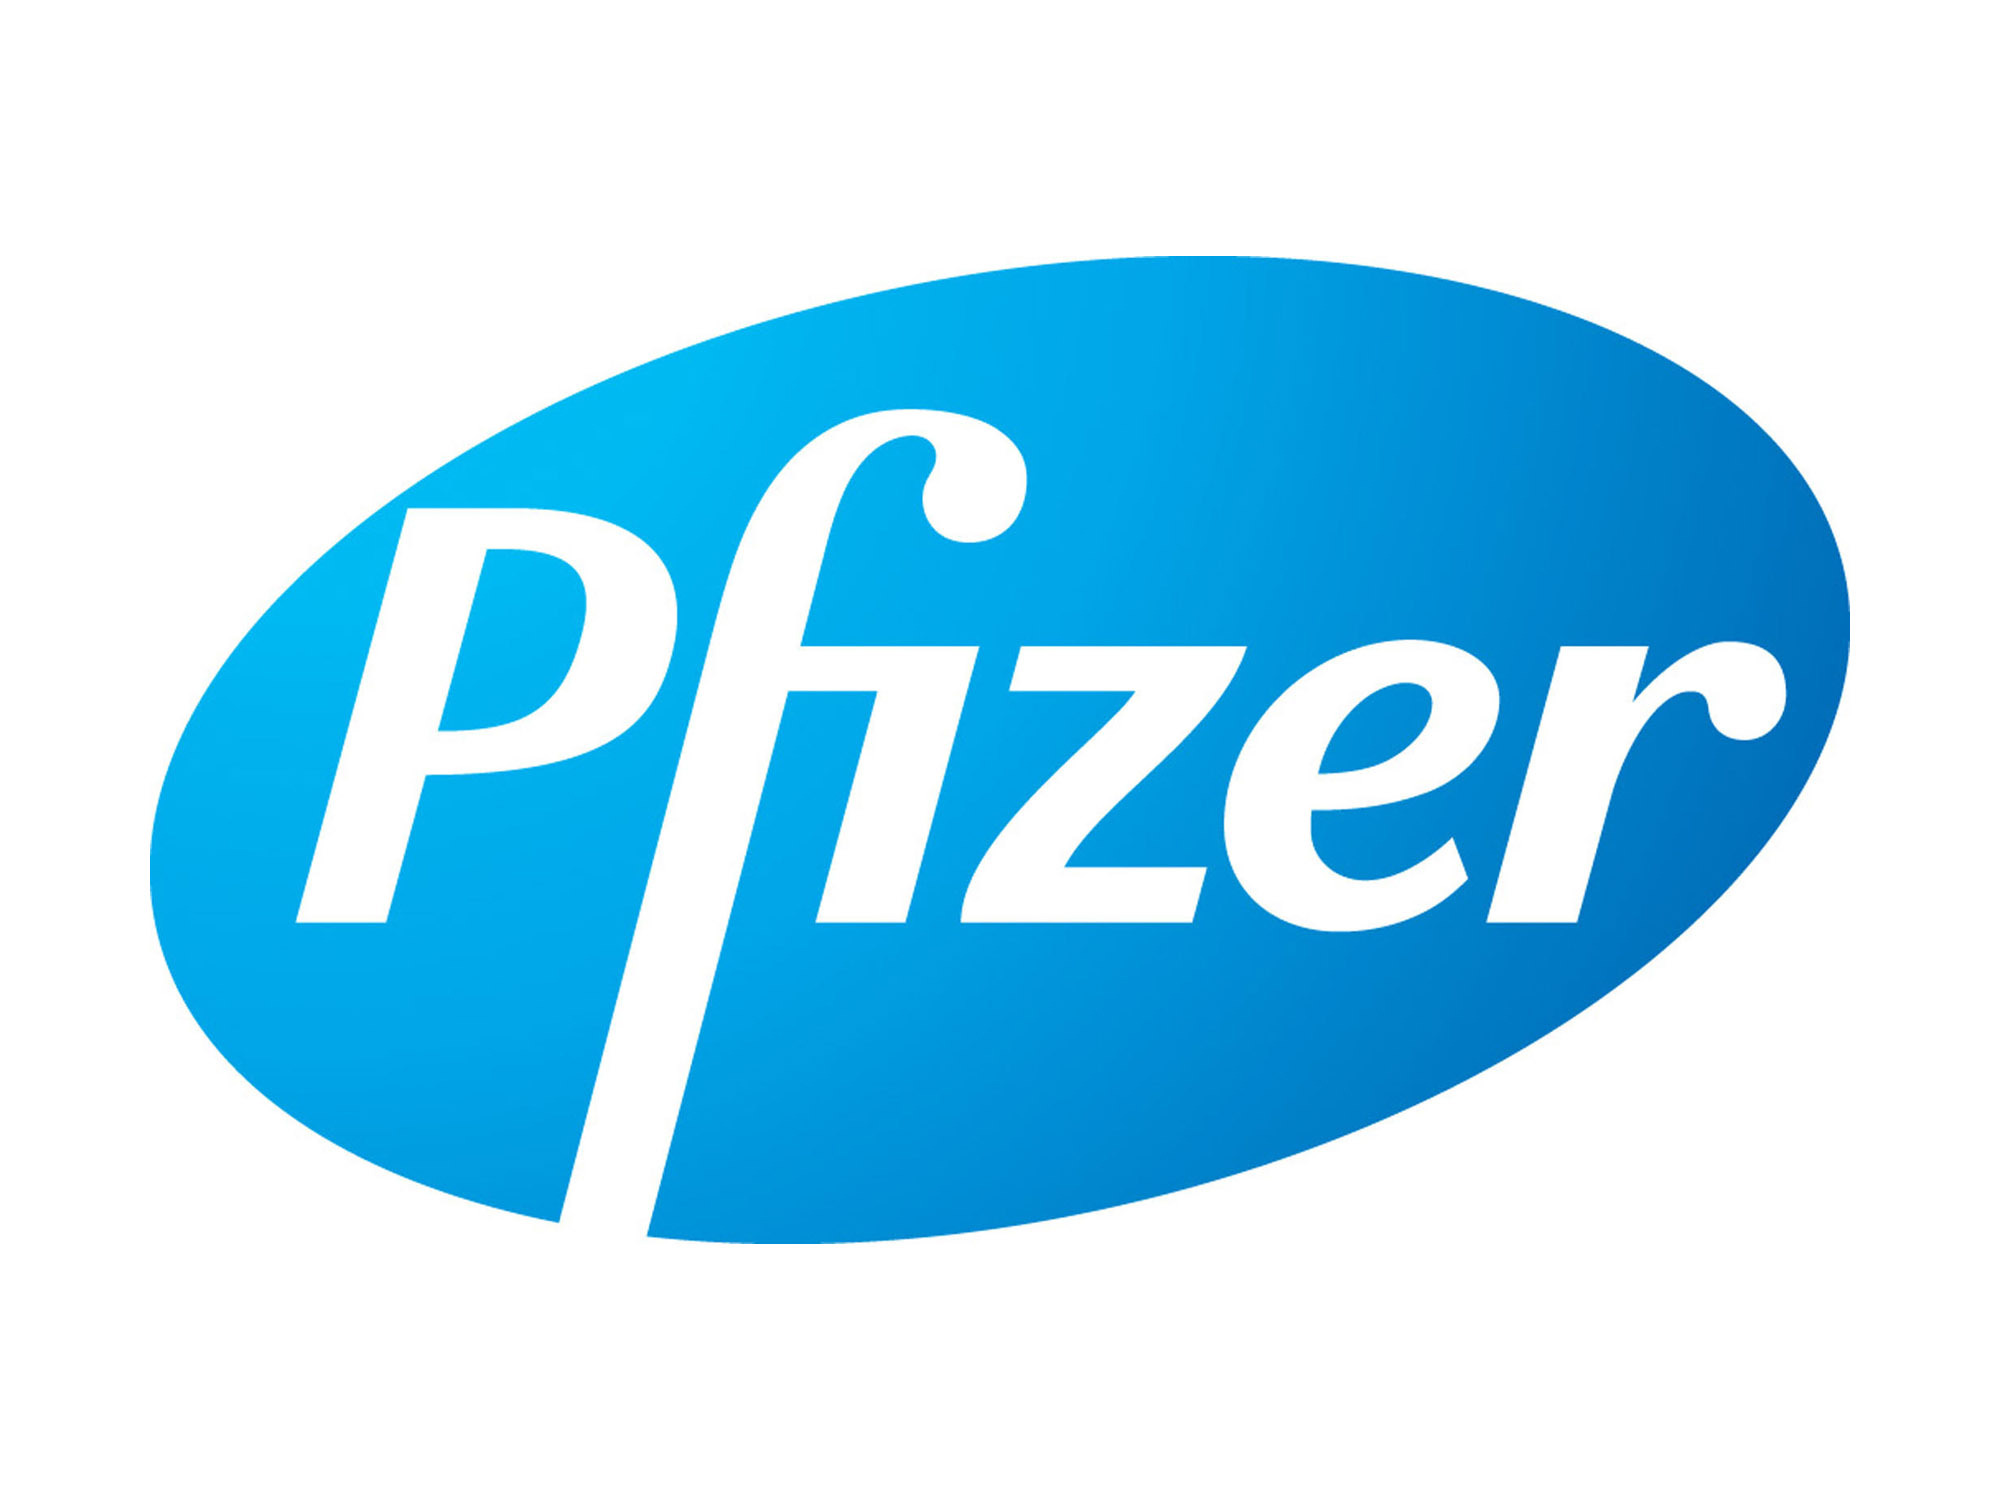 Pfizer Inc. logo.  (PRNewsFoto/Pfizer Inc.)